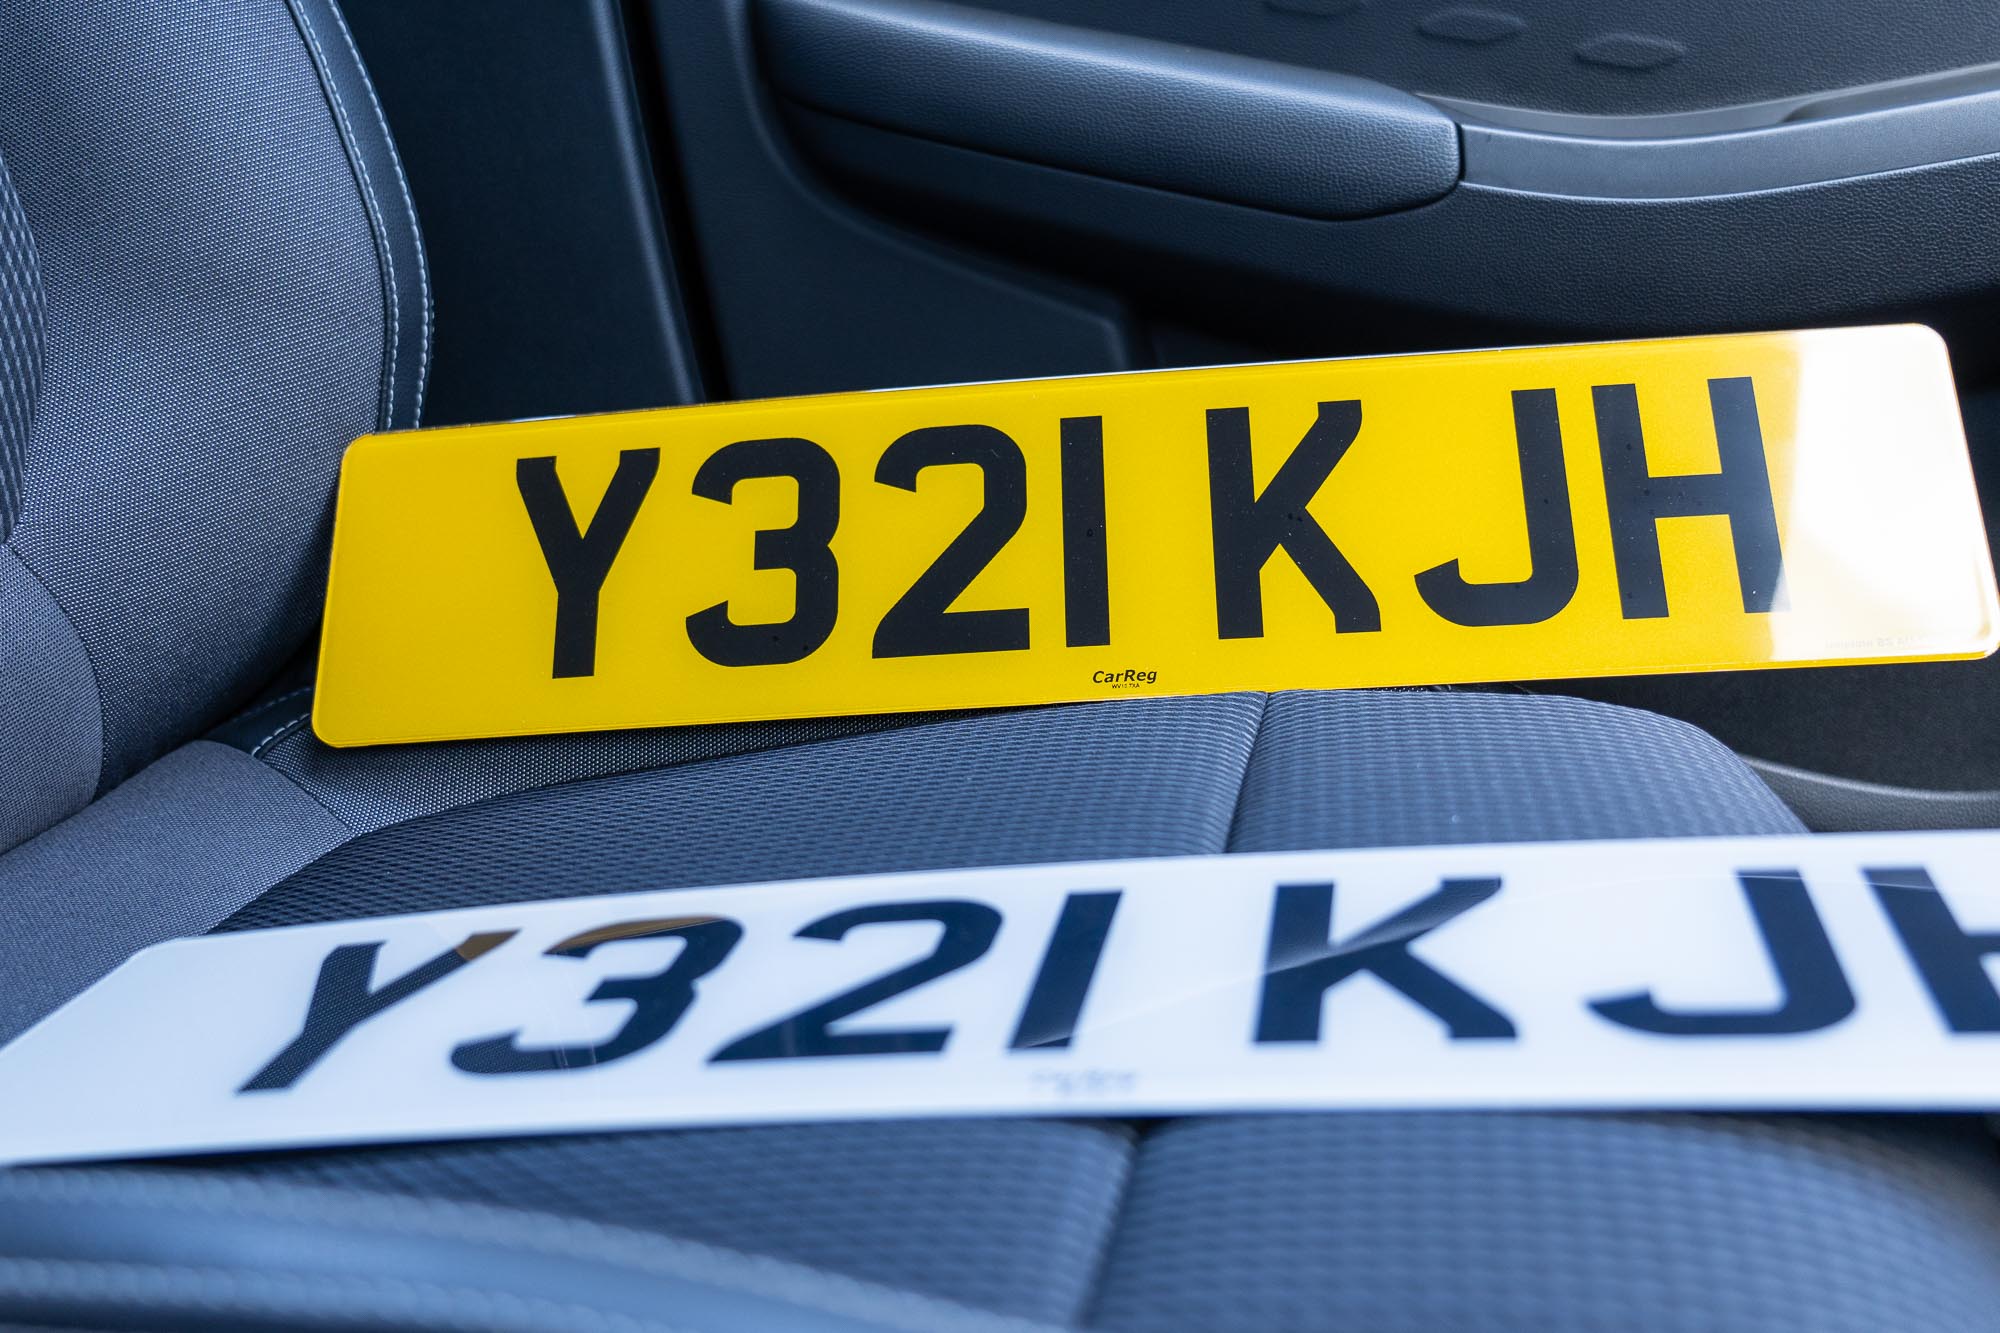 Personalised car reg plates